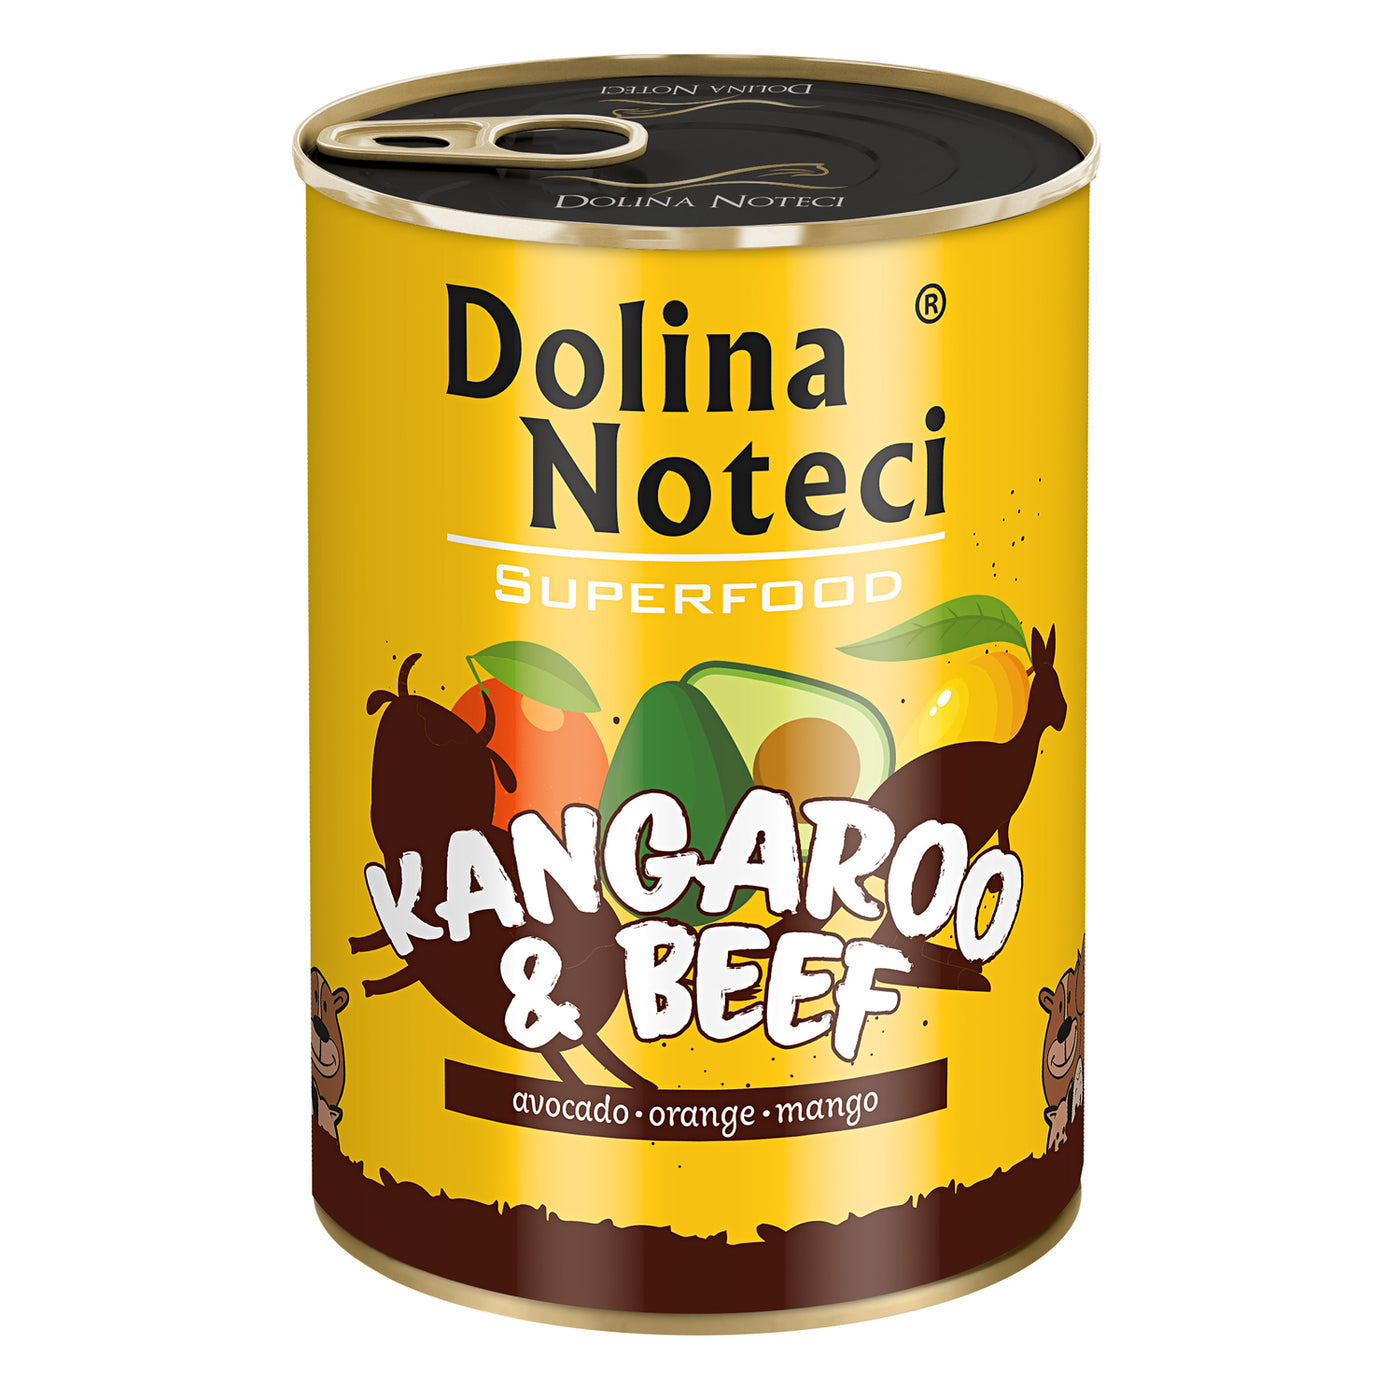 Dolina Noteci Superfood - 400g Kangaroo & Beef